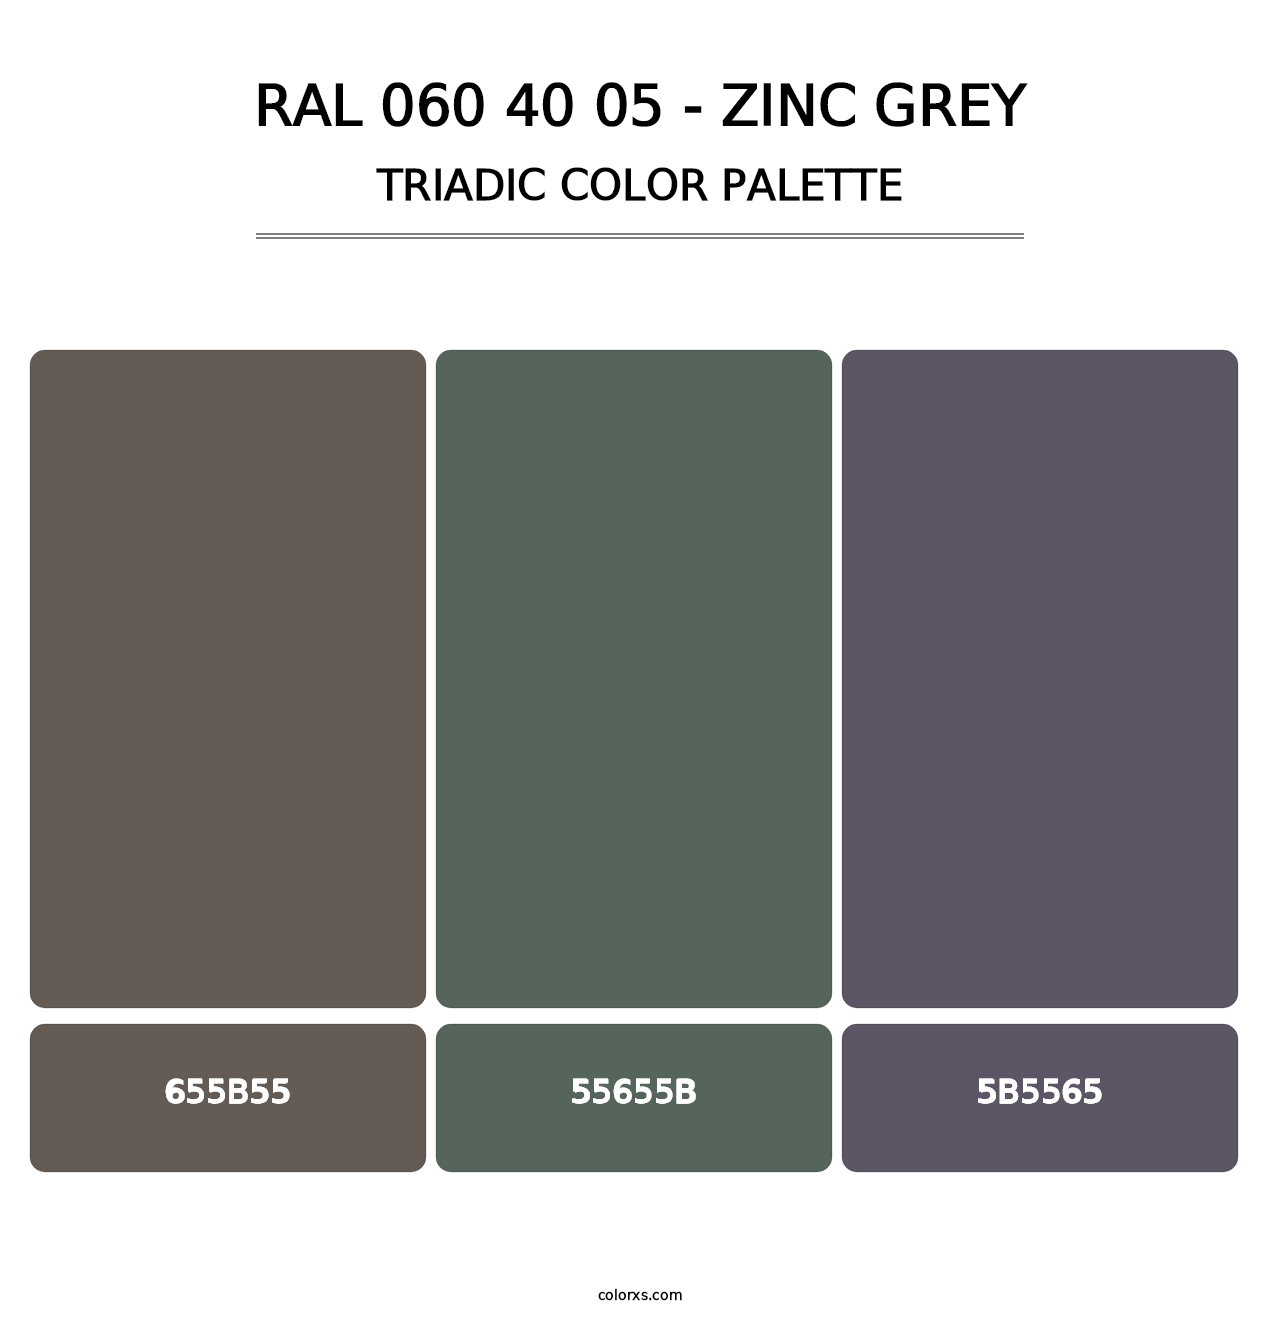 RAL 060 40 05 - Zinc Grey - Triadic Color Palette